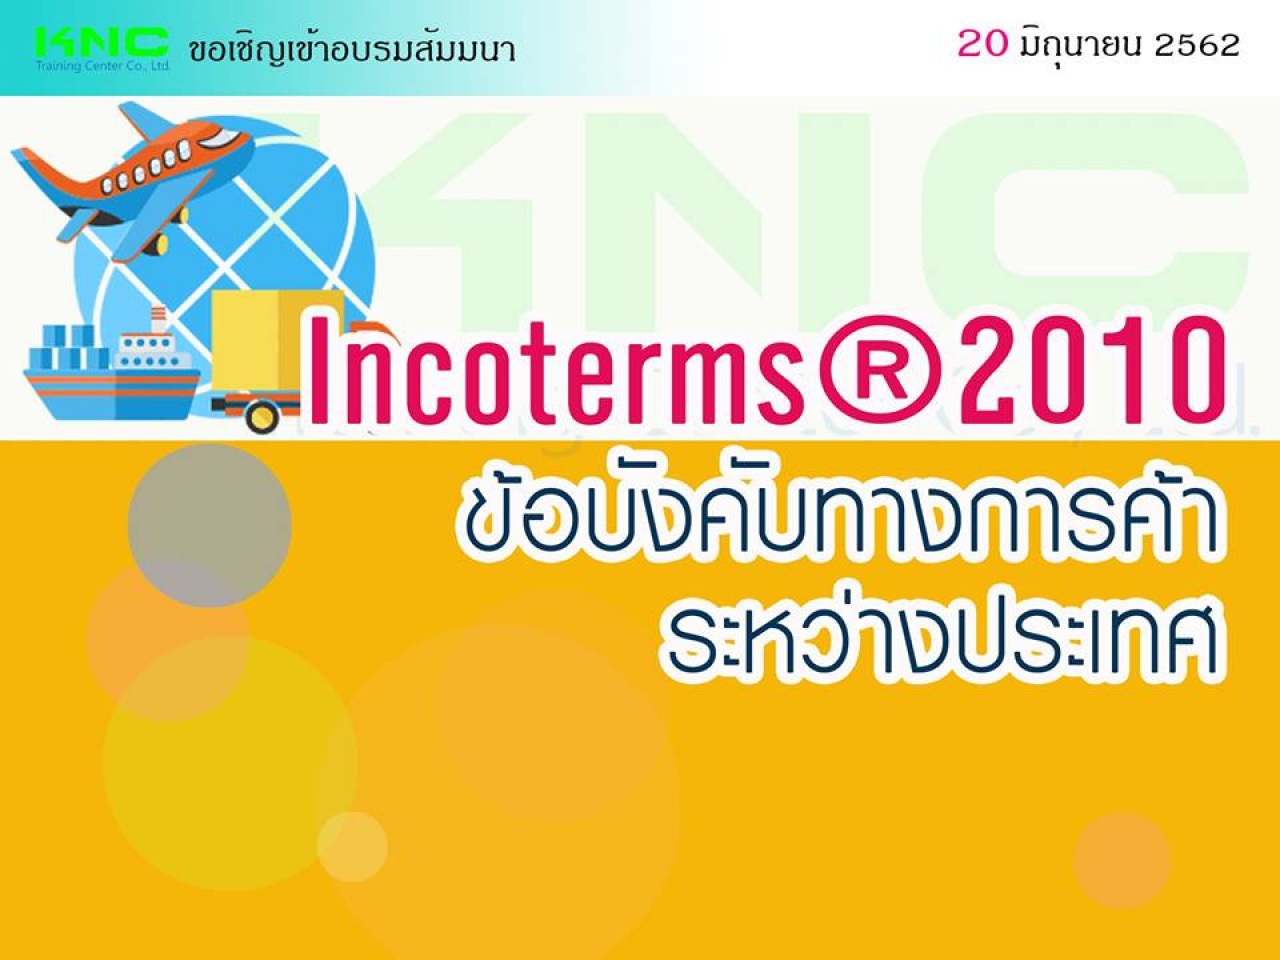 Incoterms ® 2010 ข้อบังคับทางการค้าระหว่างประเทศ